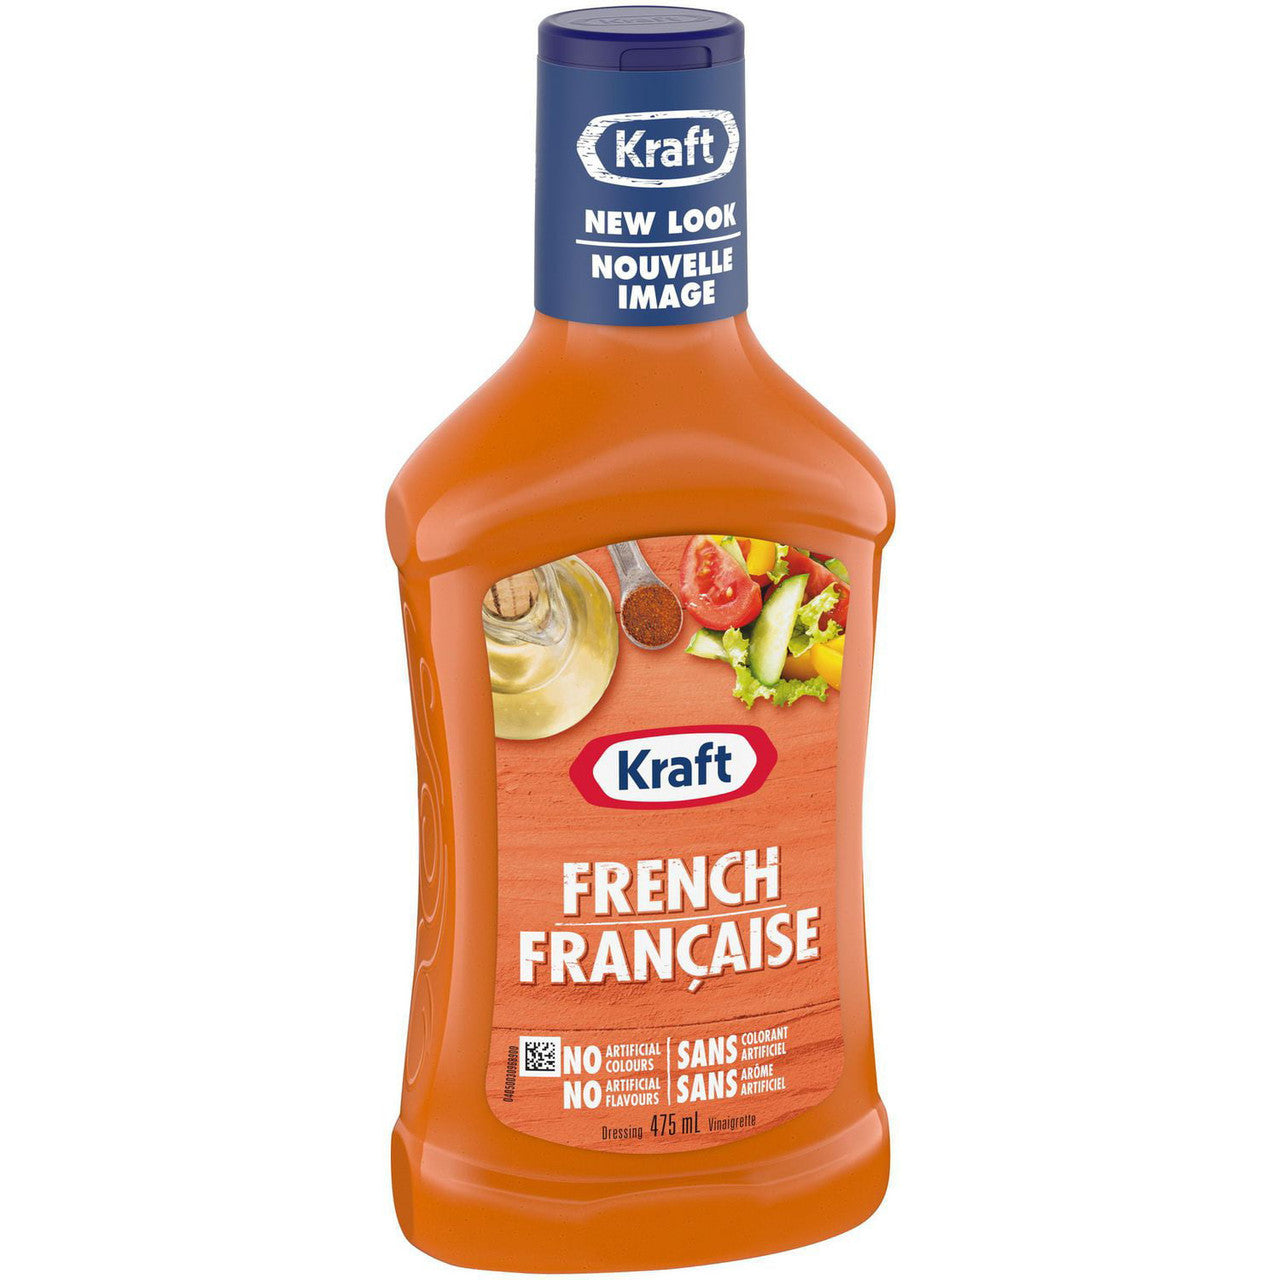 Kraft French Salad Dressing, 475mL/16 fl. oz., Bottle, {Imported from Canada}